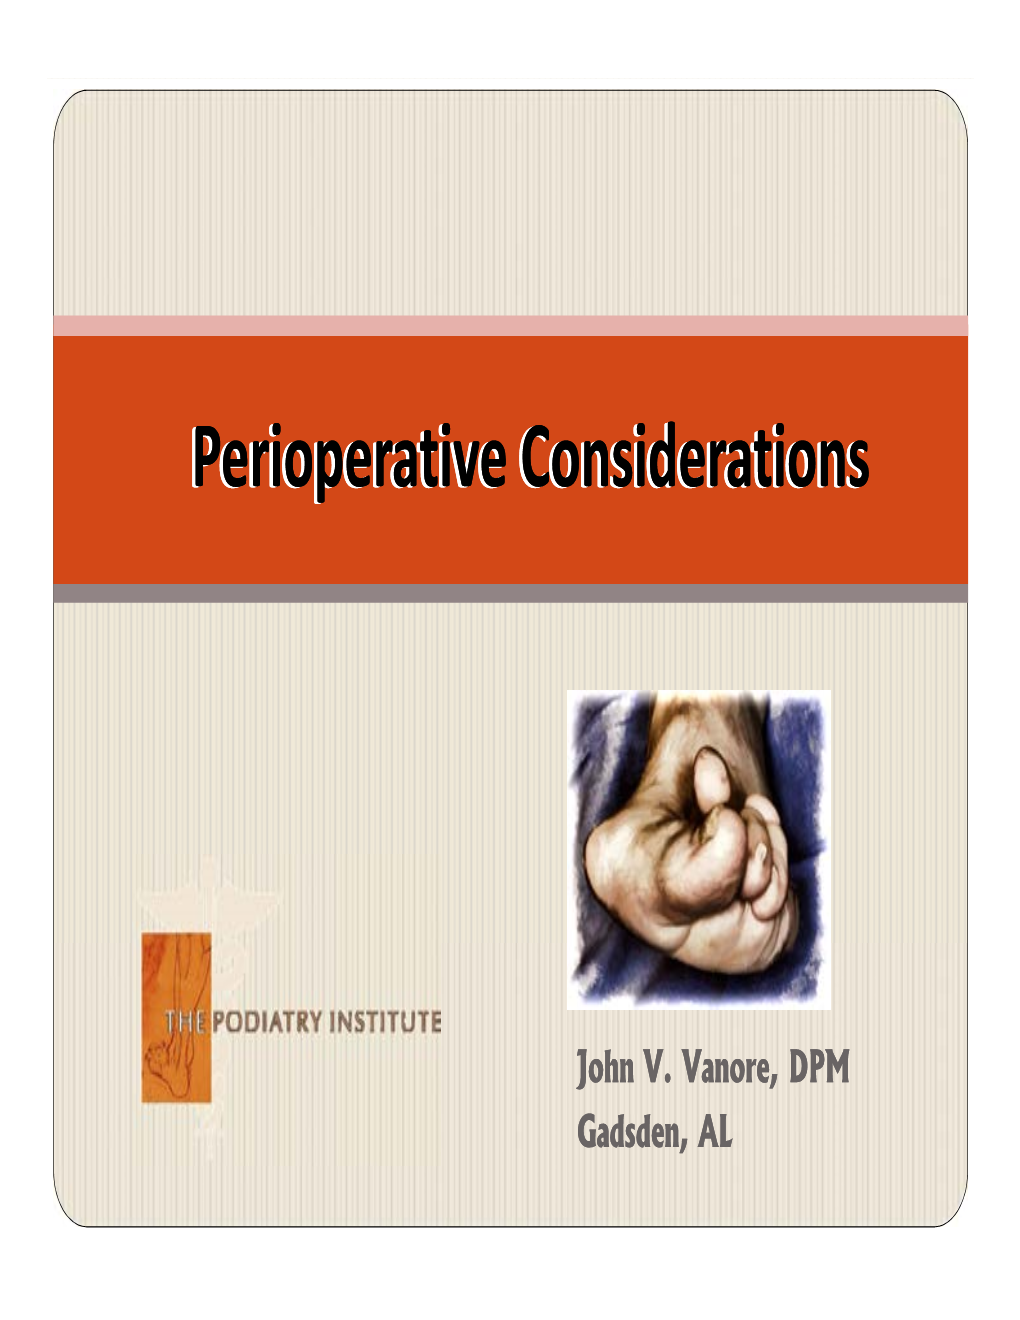 Perioperative Considerationsconsiderations